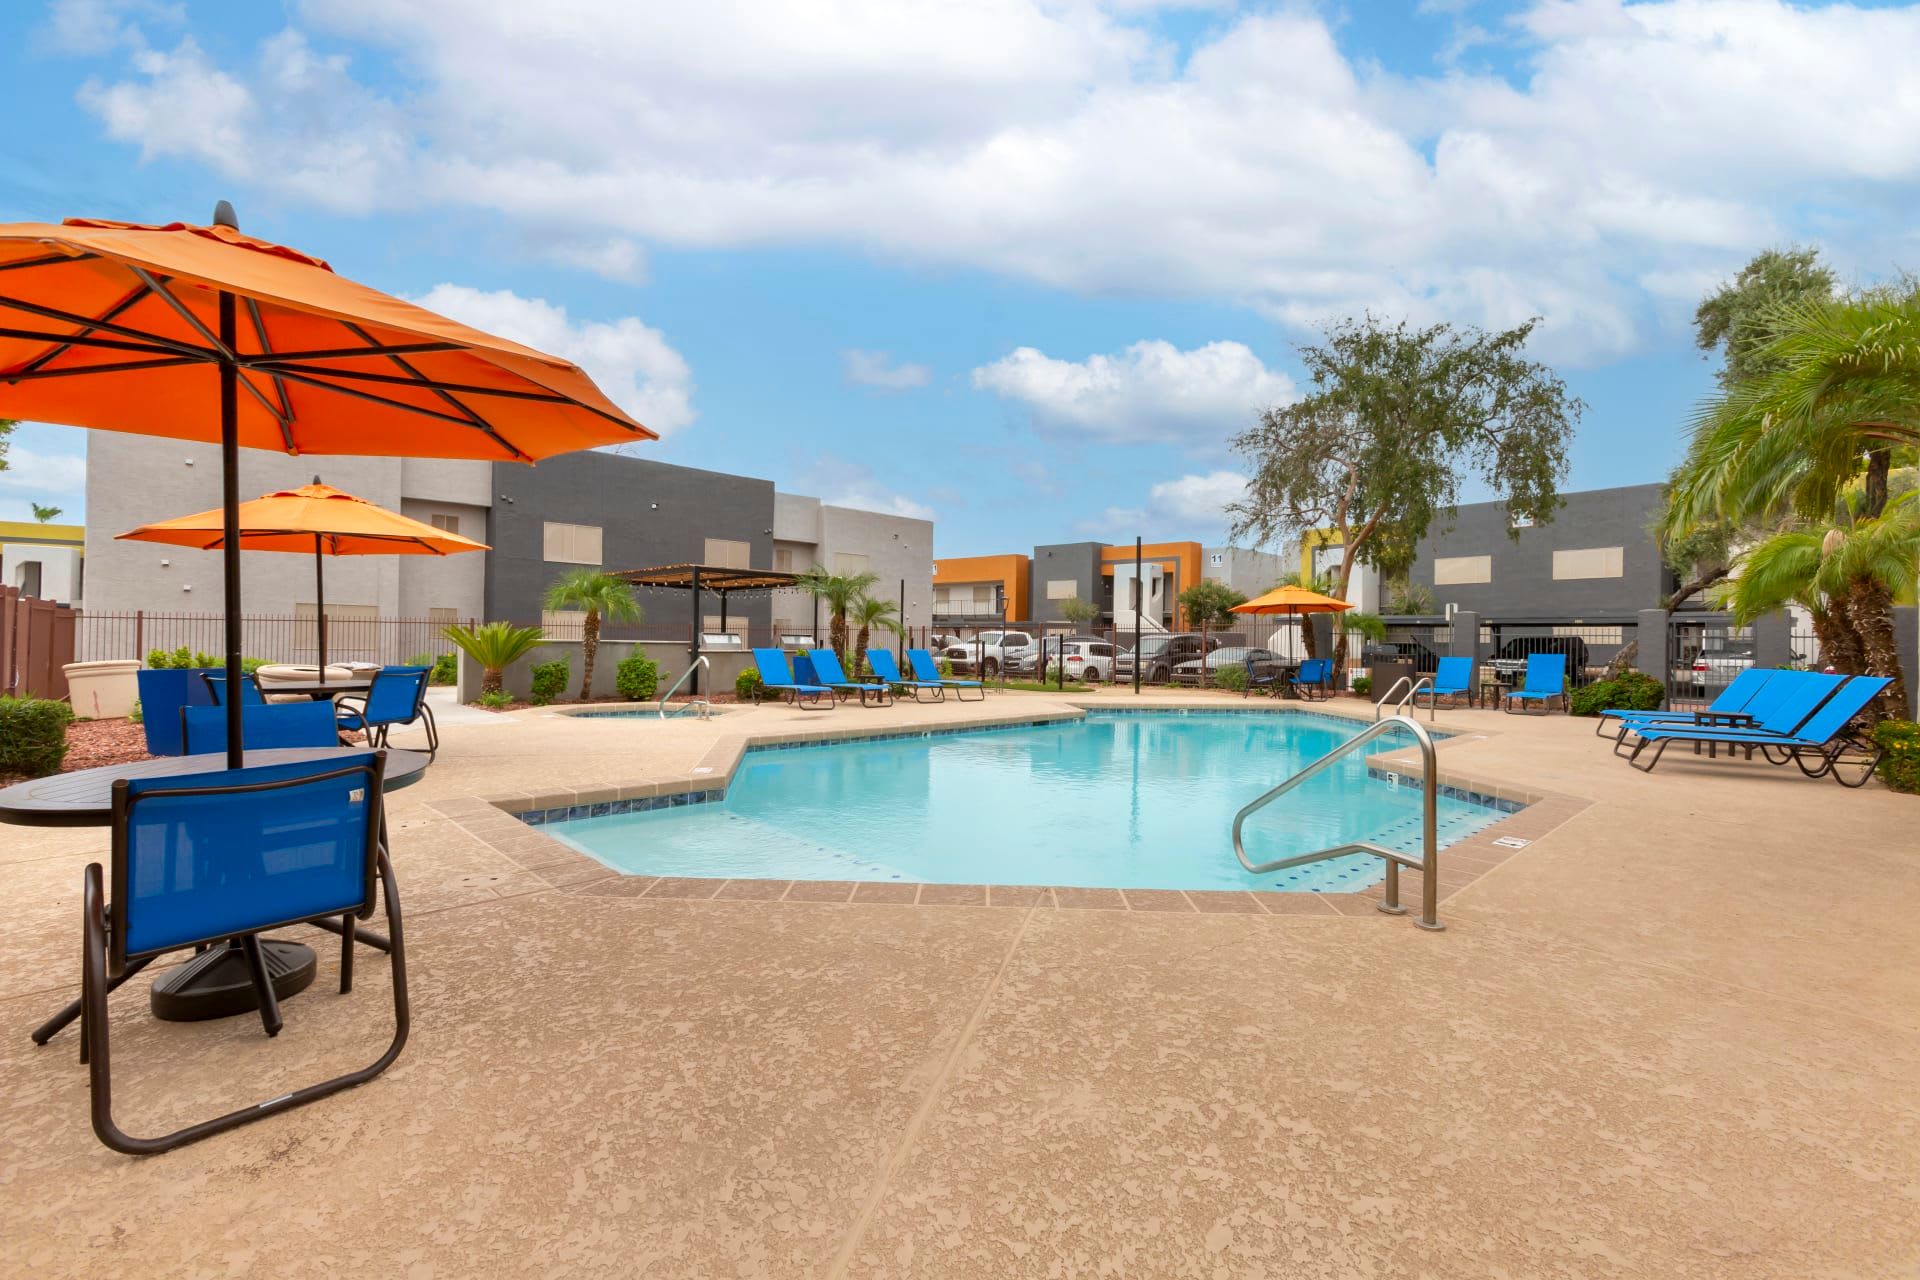 Pool area at Newport in Avondale, Arizona